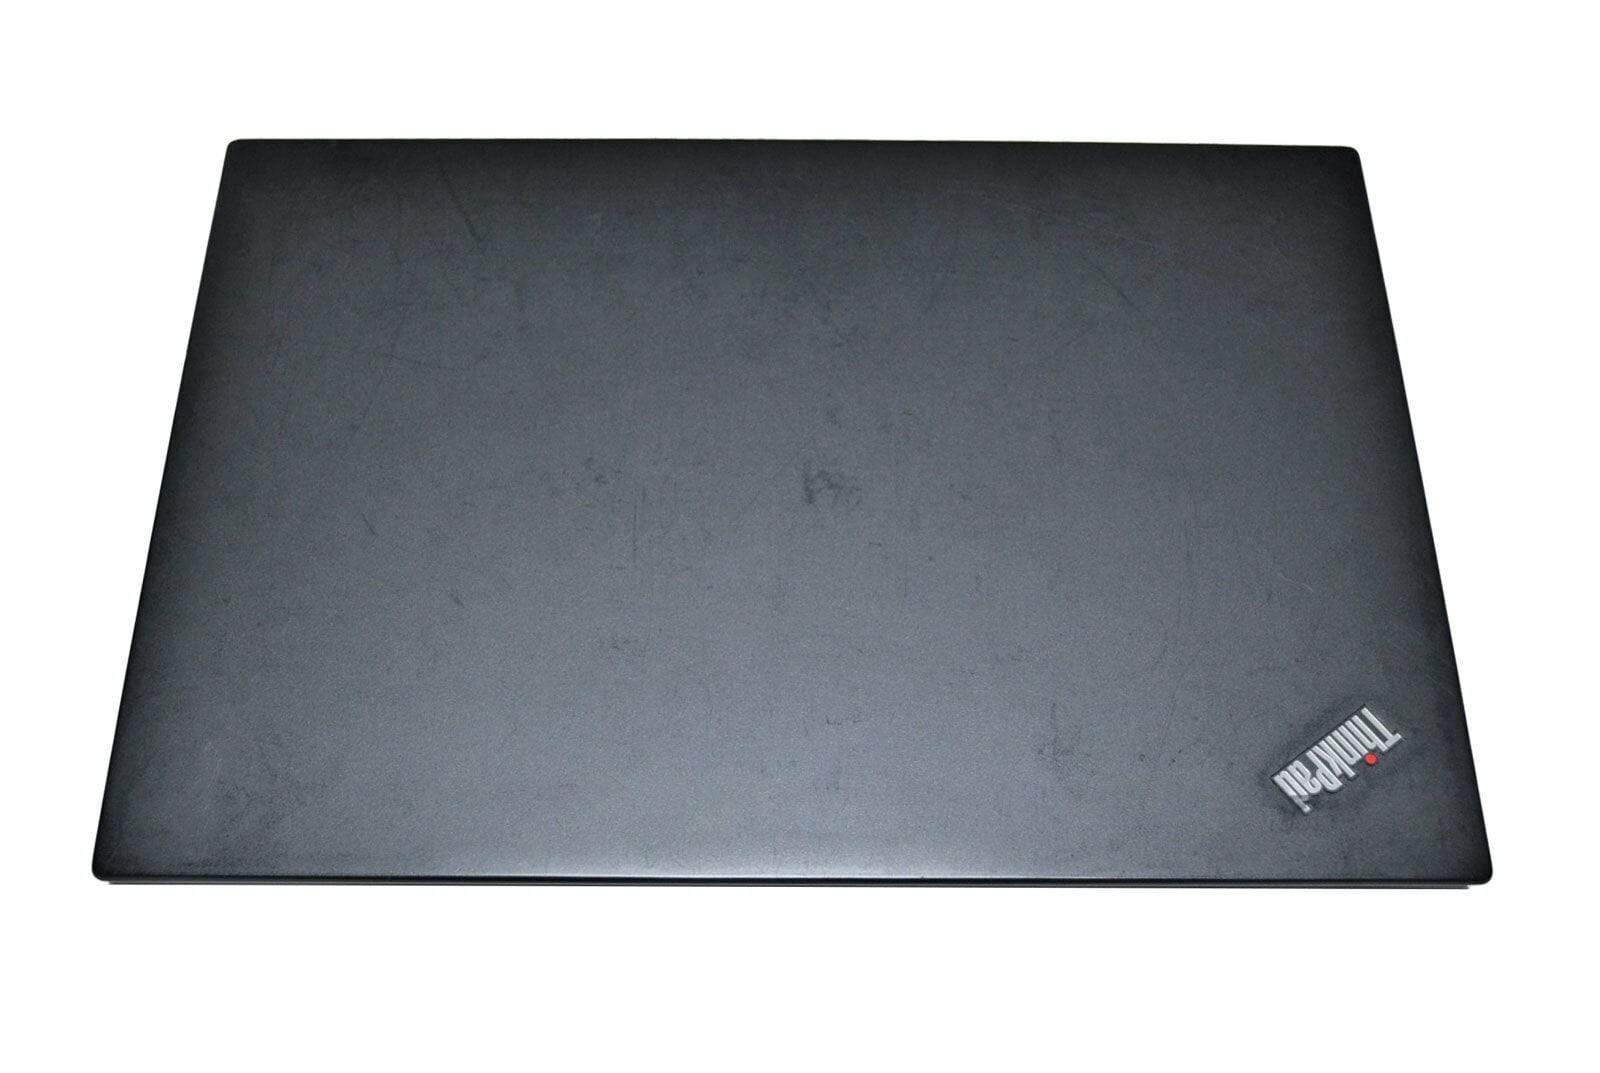 Lenovo Thinkpad T470S Touch UltraBook: 1TB SSD, Core i7-7600U, 12GB RAM Warranty - CruiseTech